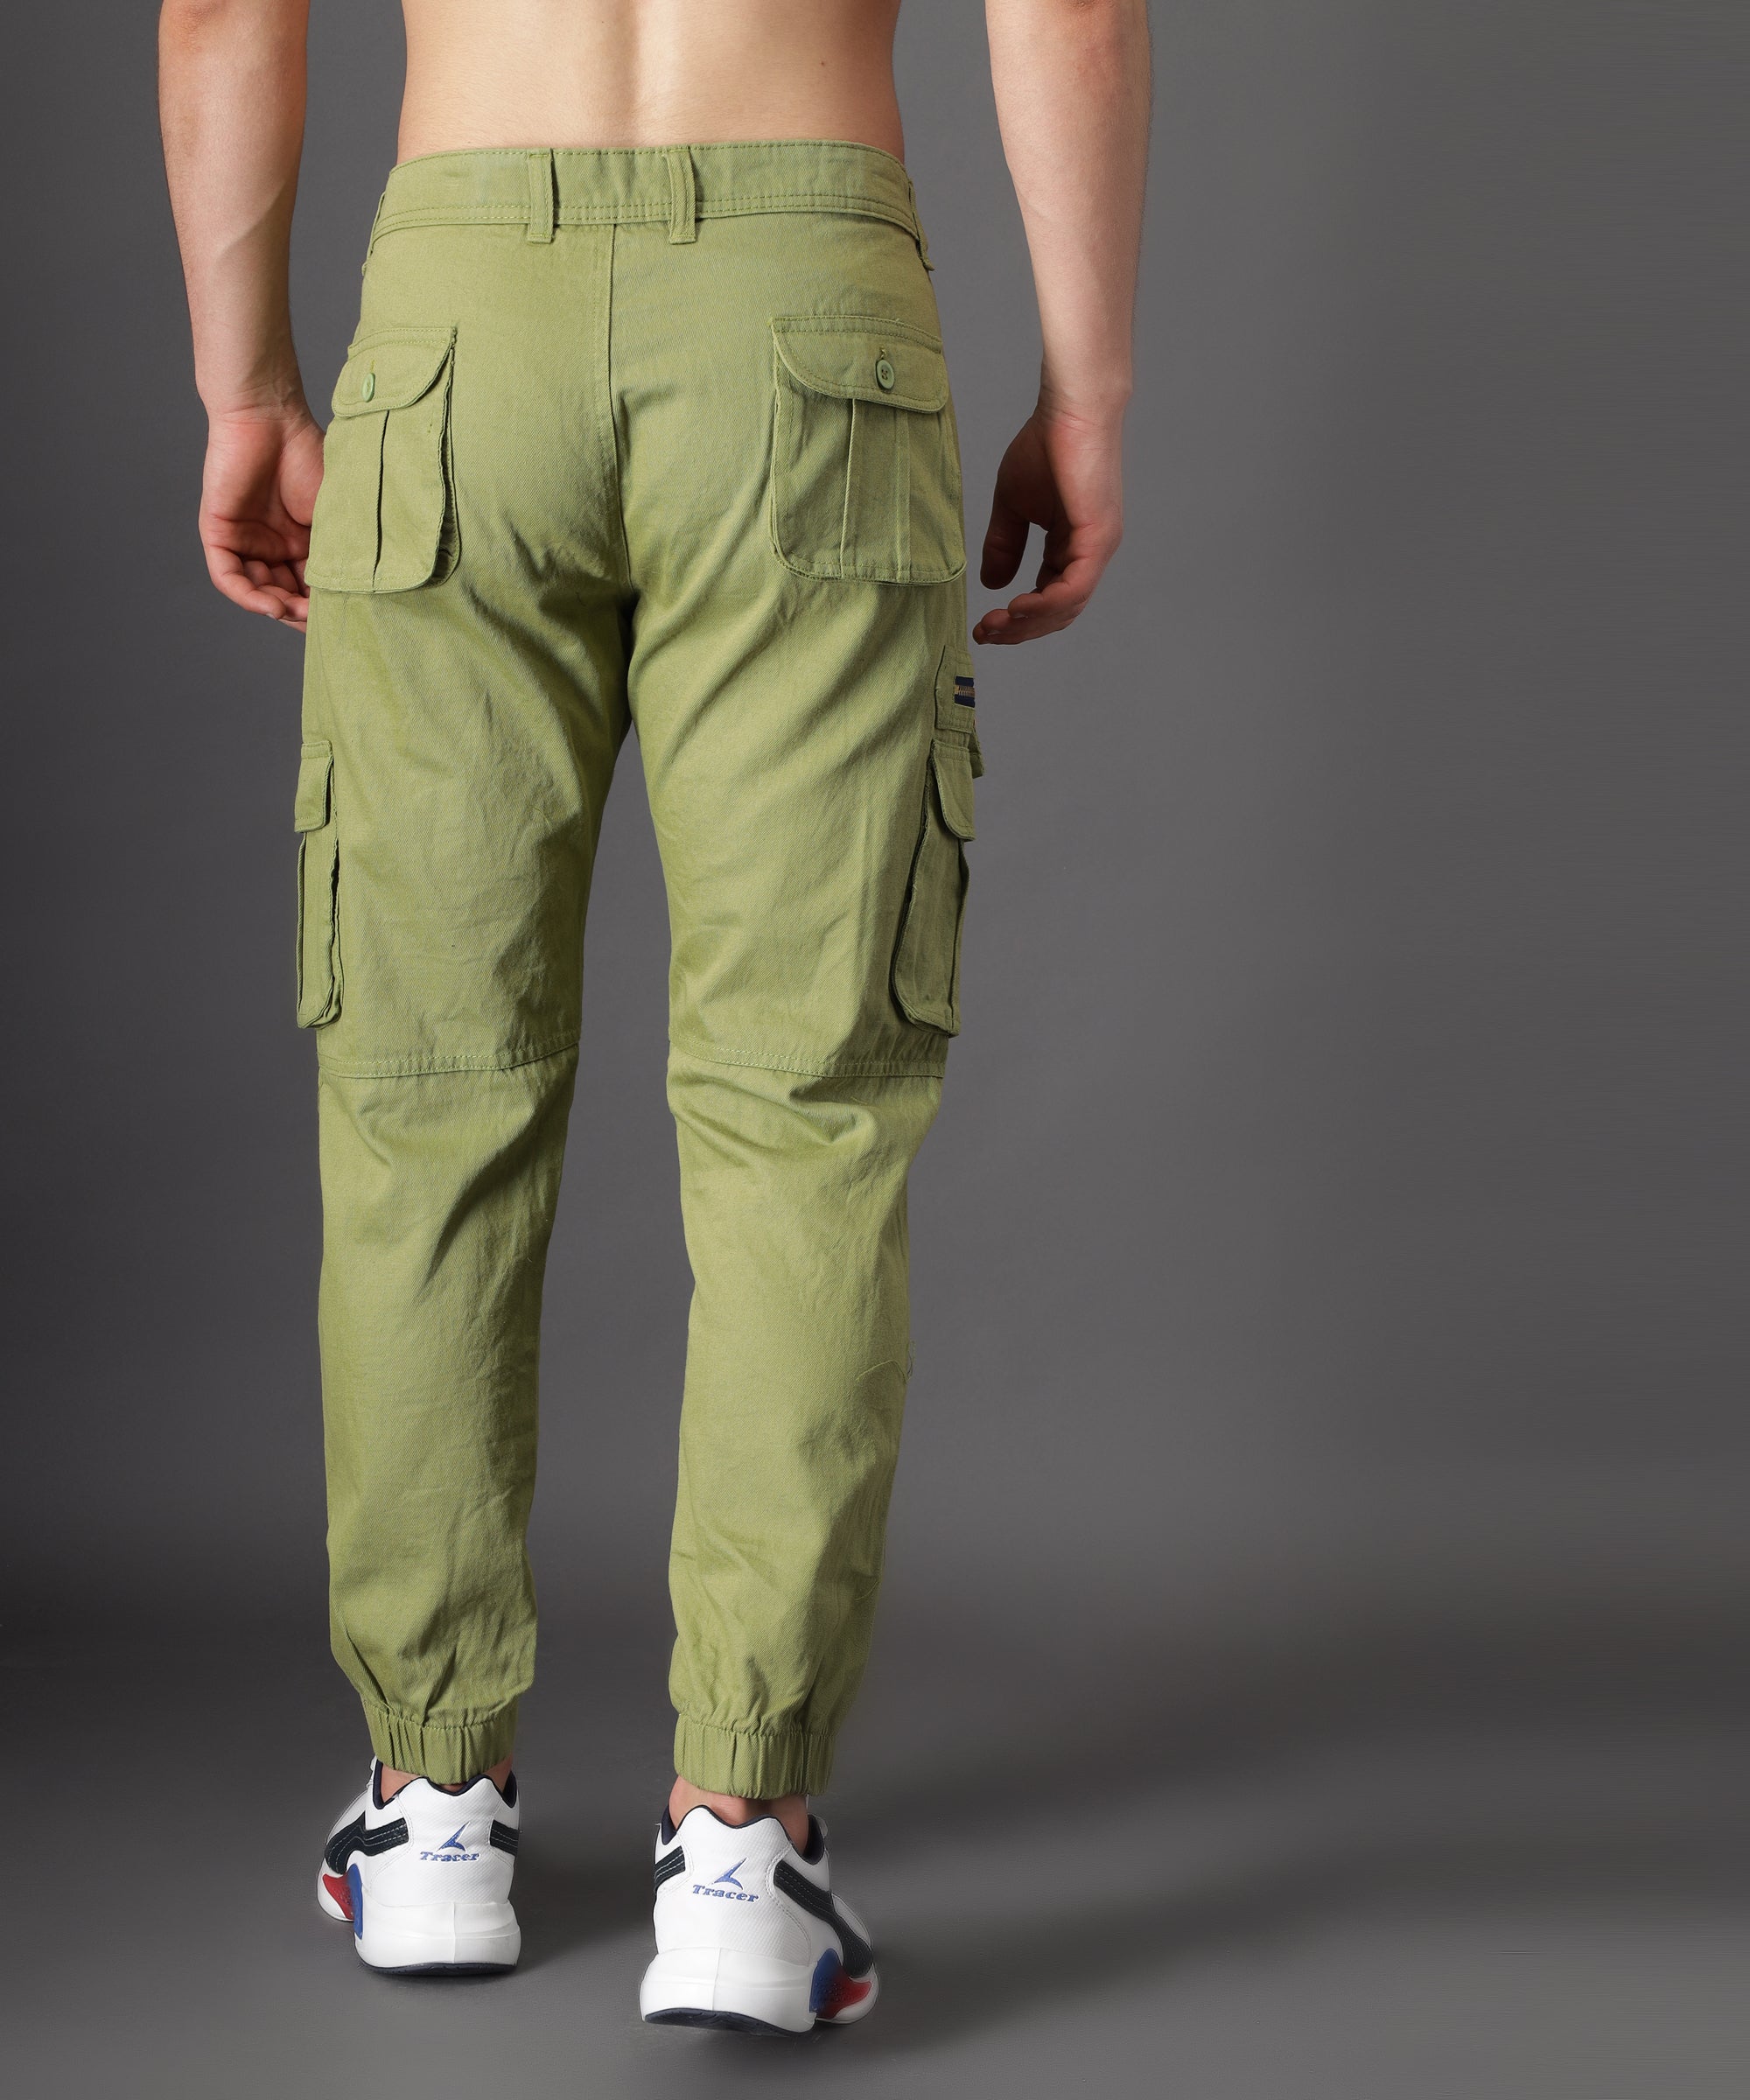 NoLogo Olive Green Cargo Pants | NKJBCP-1072 | Cilory.com